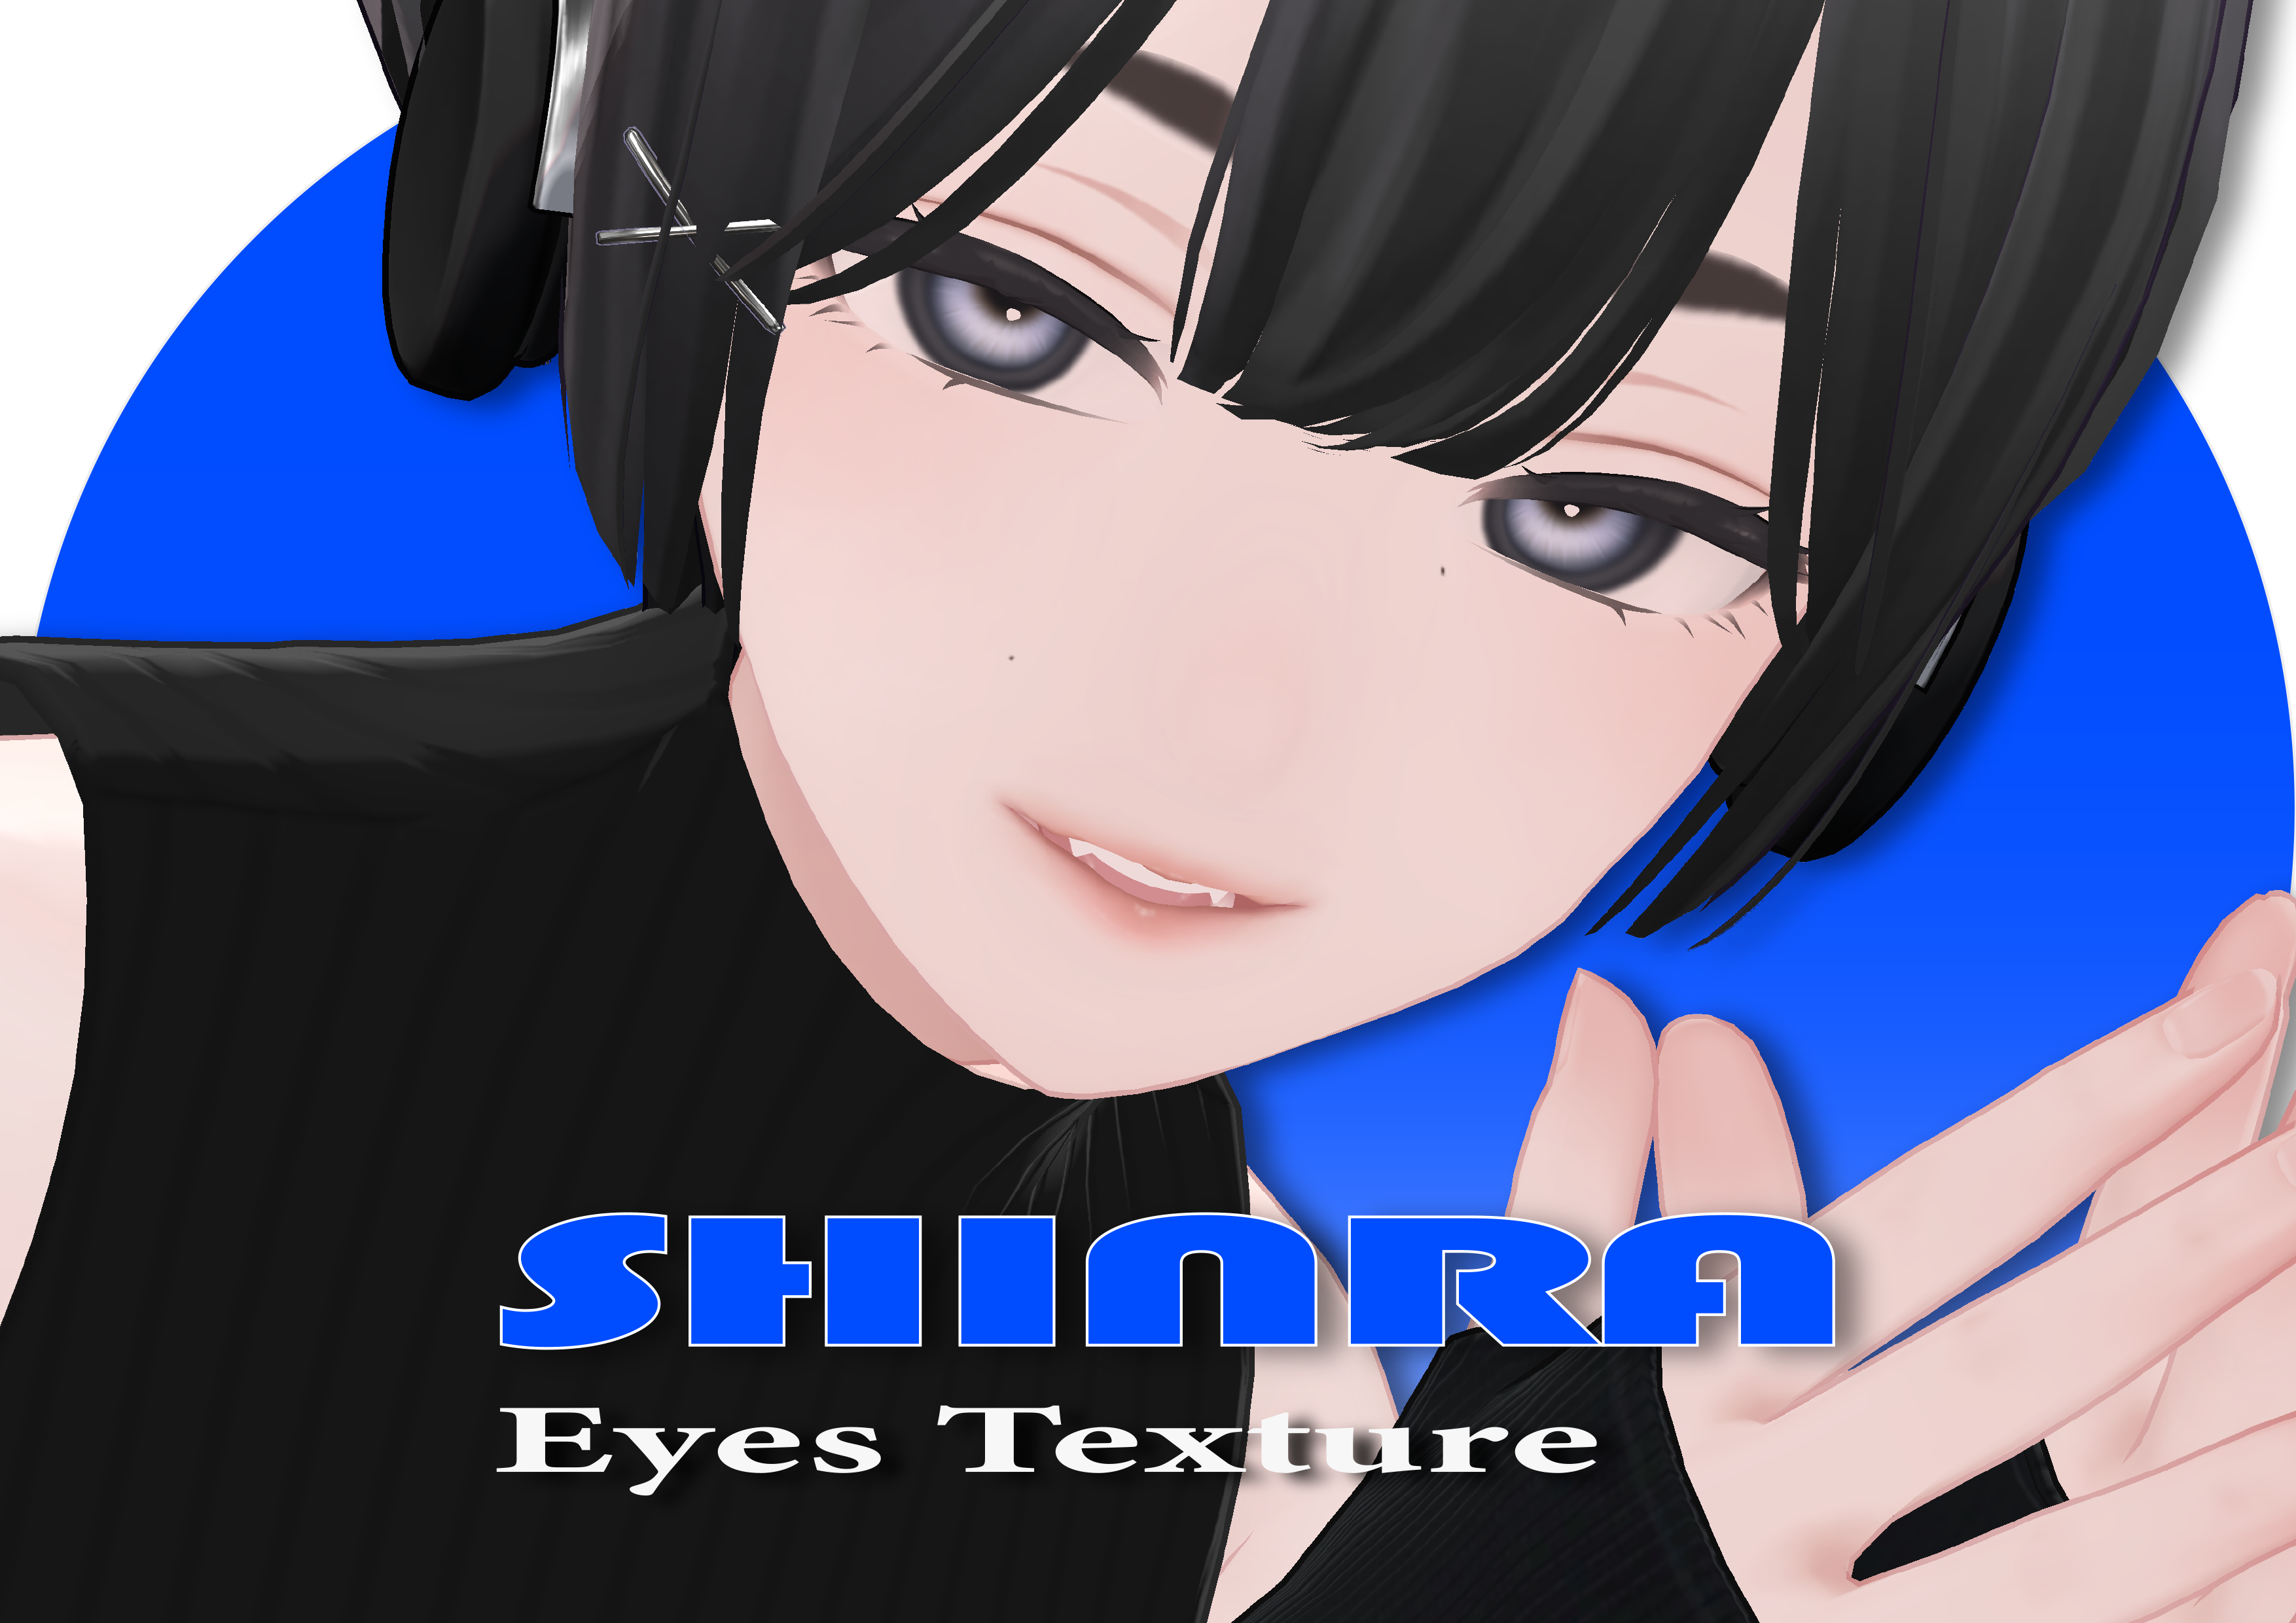 Shinra專用】No.05-2_ Eyes Texture